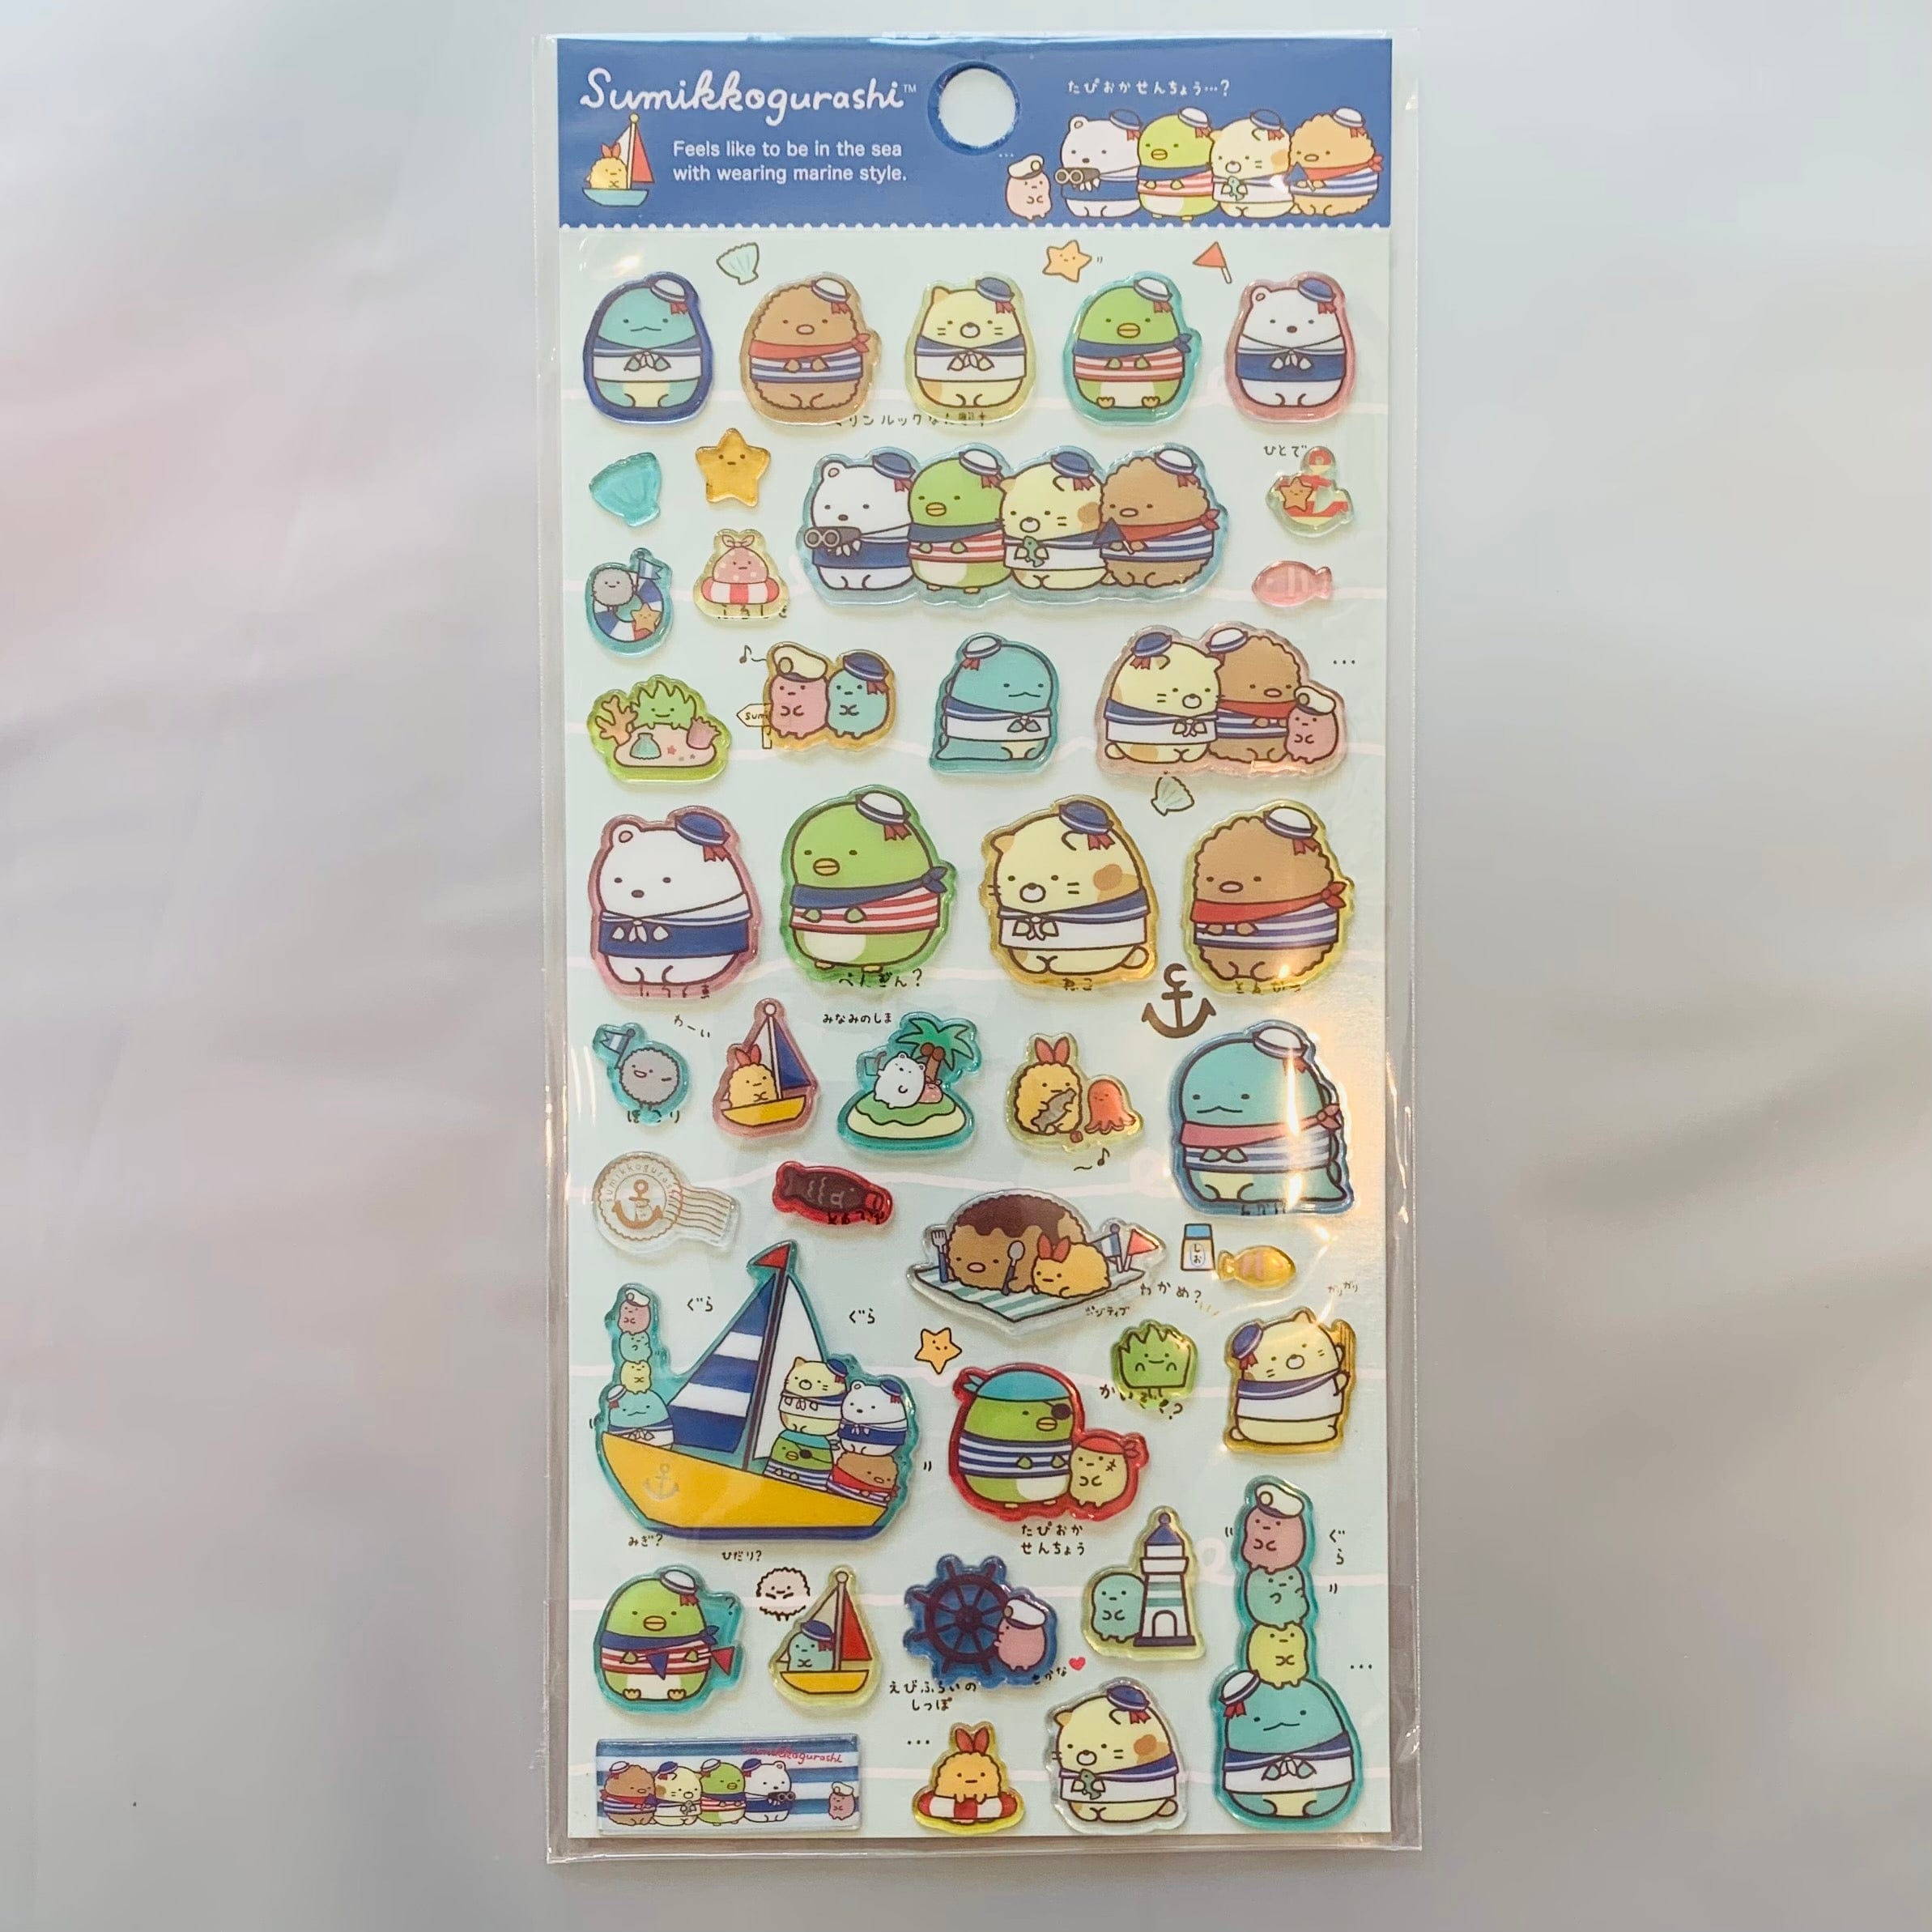 Kawaii Import San-X Sumikko Gurashi "Things in the Corner" Marine Style Thick Epoxy Stickers (A) Kawaii Gifts 4974413643856